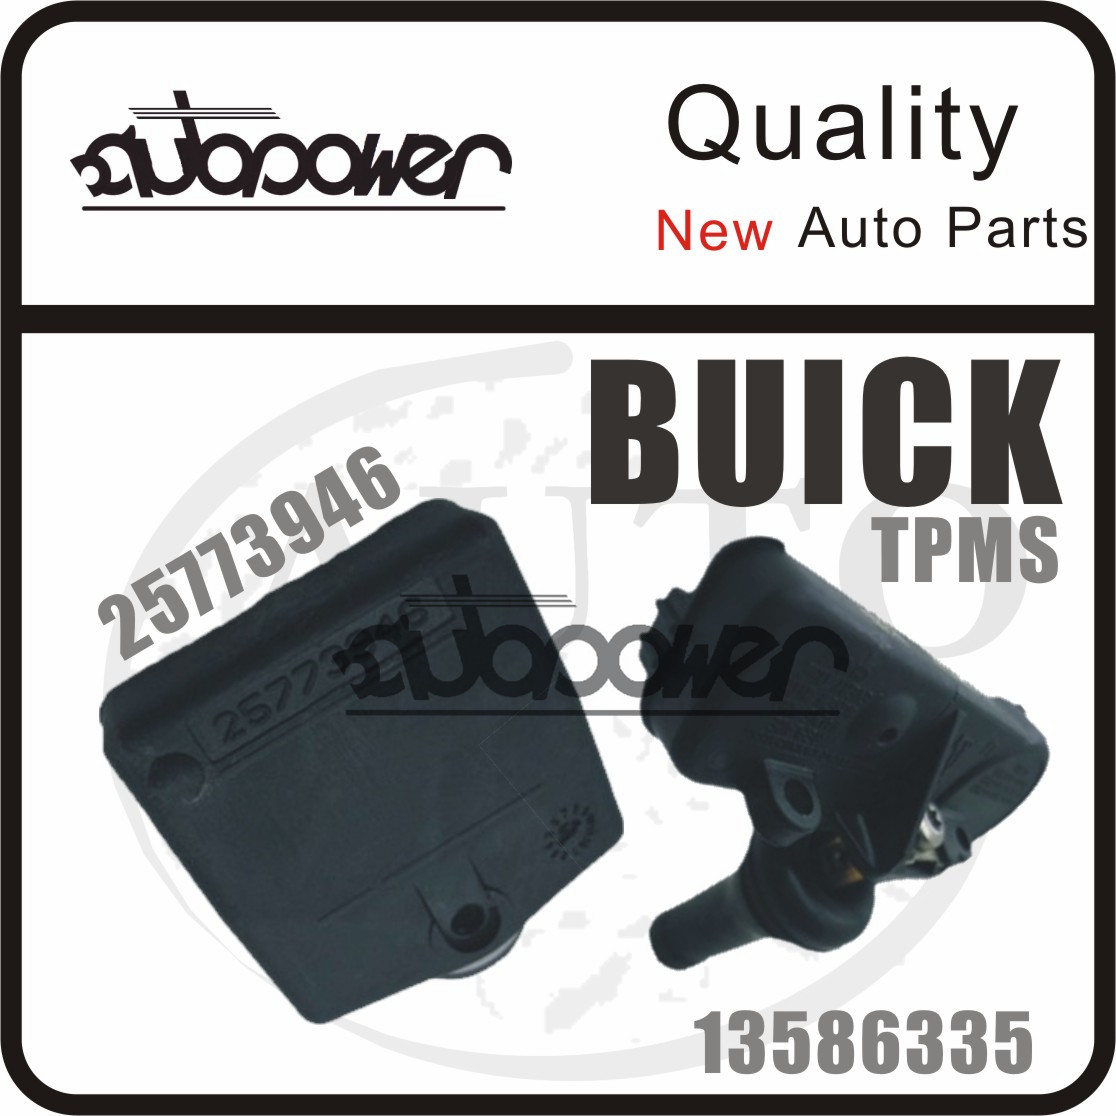 Tire Pressure Sensor for Gm, Buick